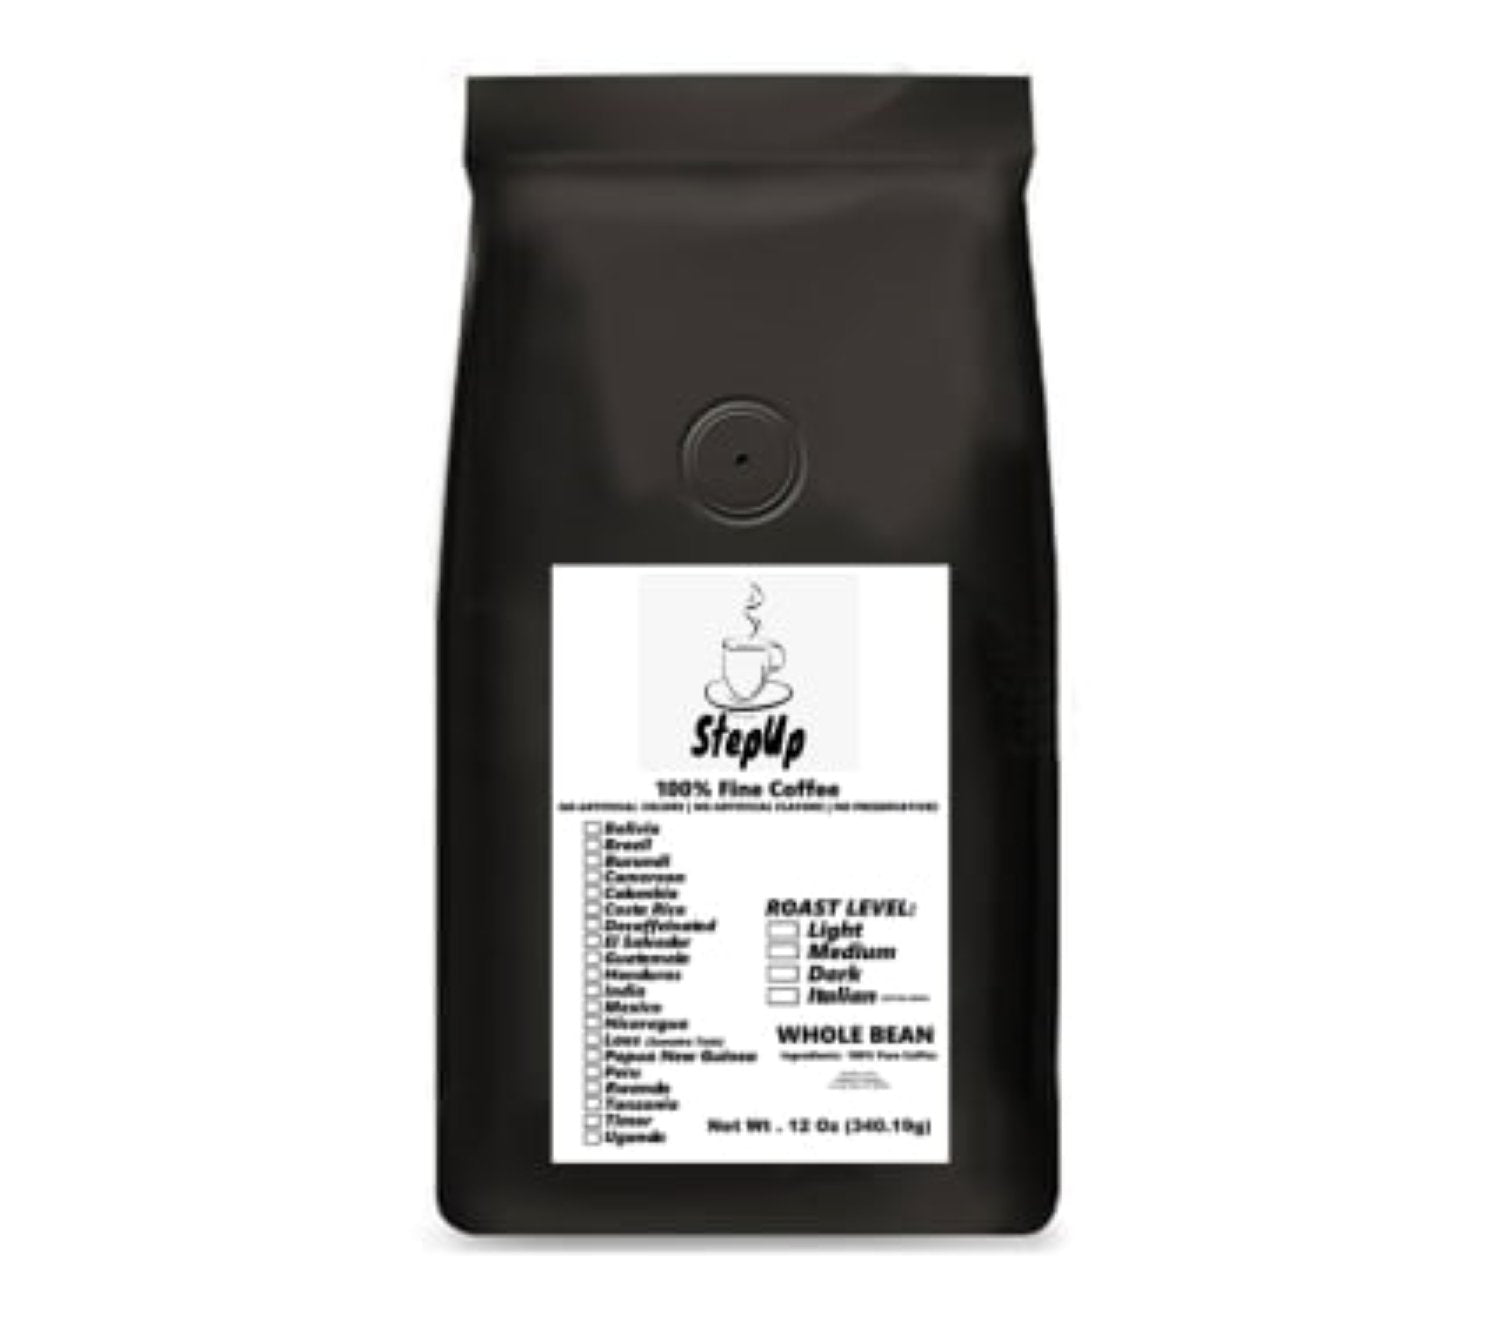 Asian Plateau Blend Whole Bean, Standard, Espresso 12oz.-5 lbs. Coffee - StepUp Coffee